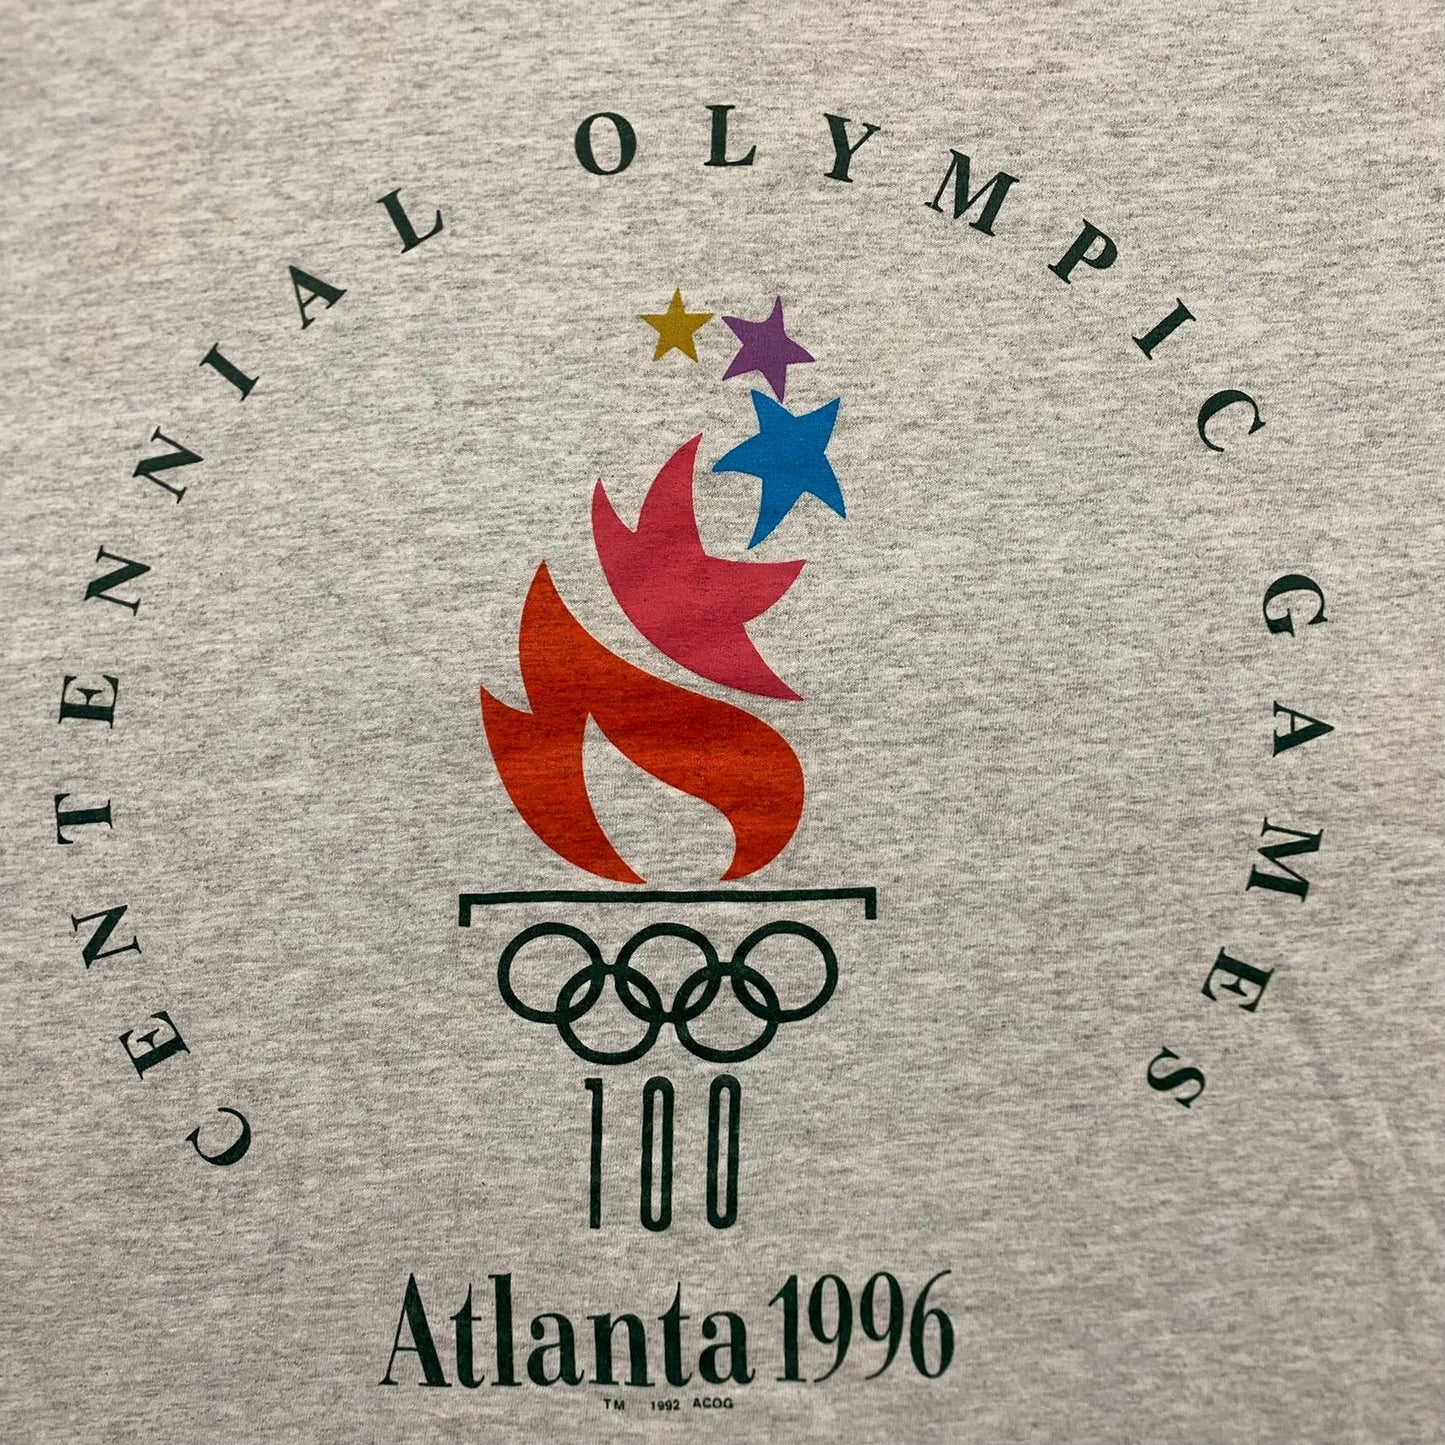 Vintage 90s Atlanta 1996 Olympics Logo Single Stitch Tee